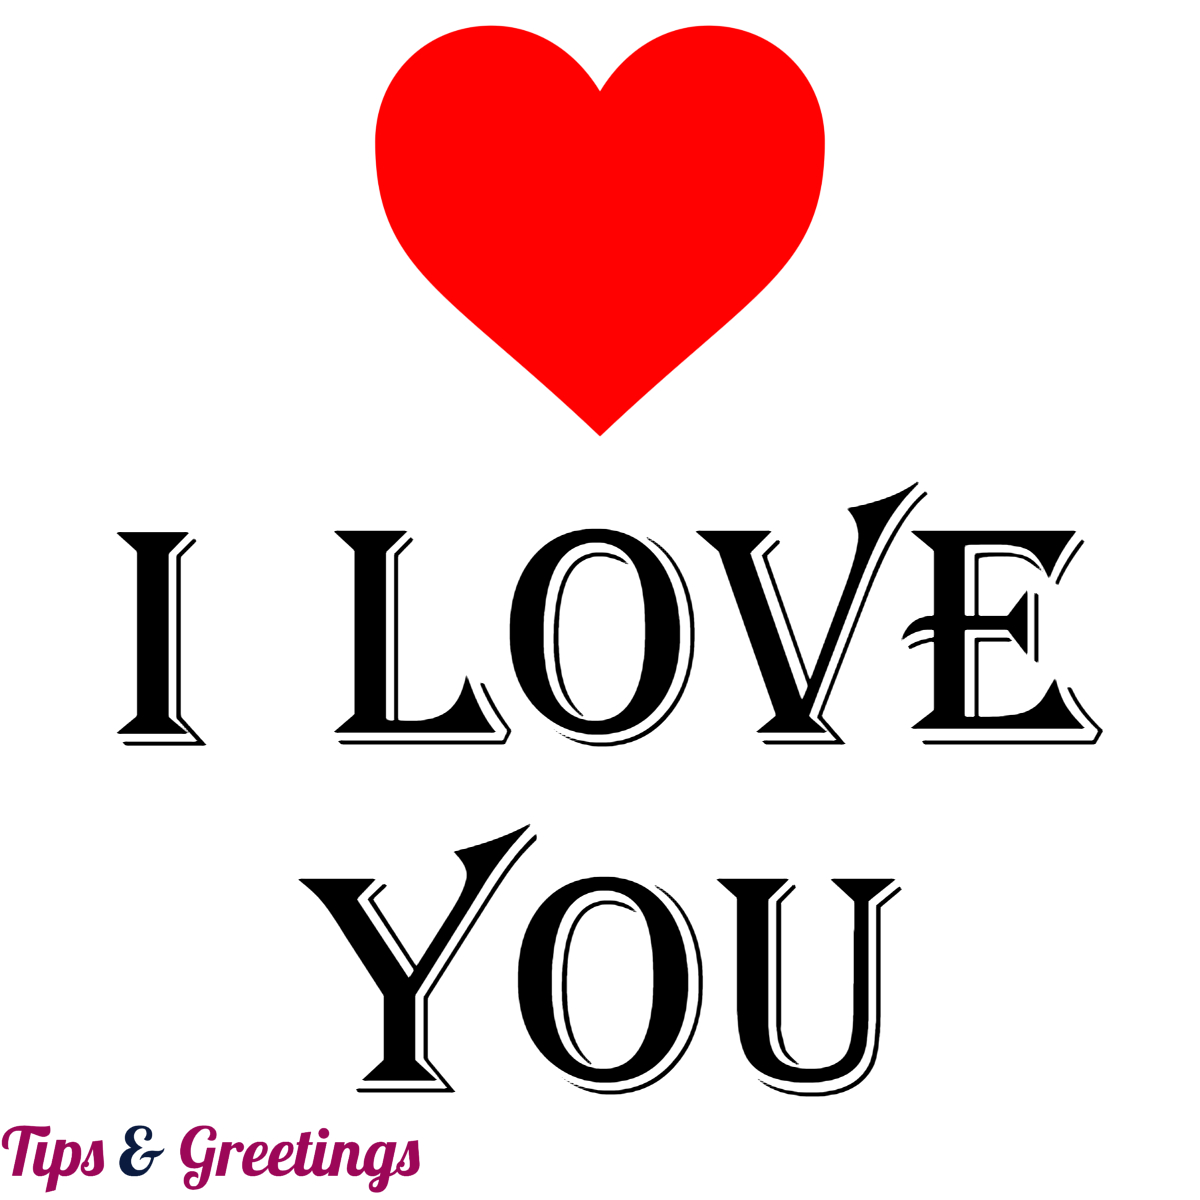 Heart valentines emoji messages big happy quotes text flickr